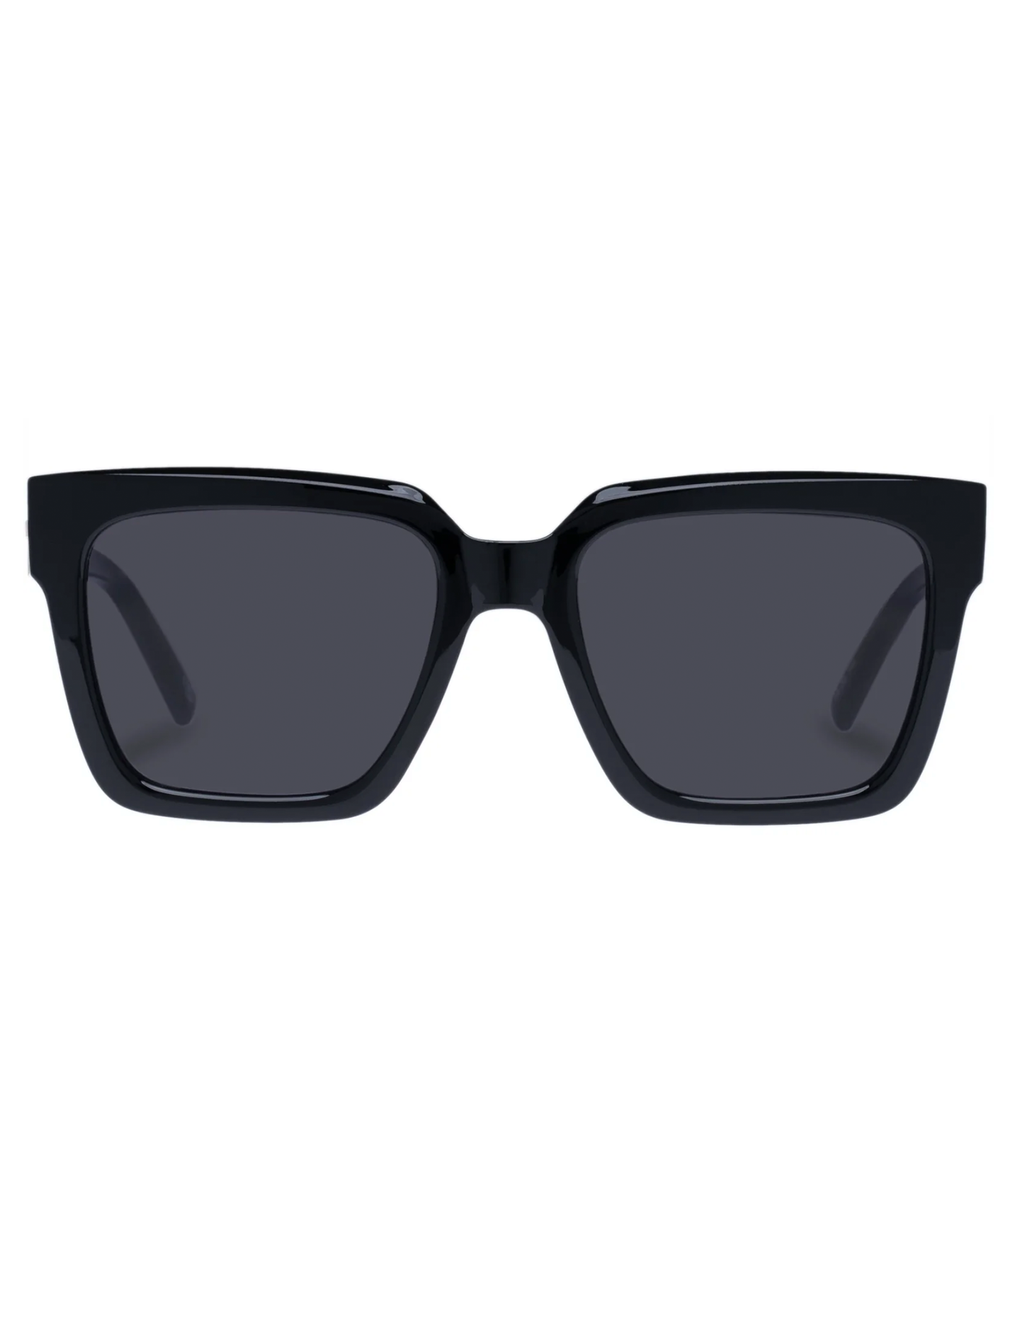 Trampler Sunglasses, Black